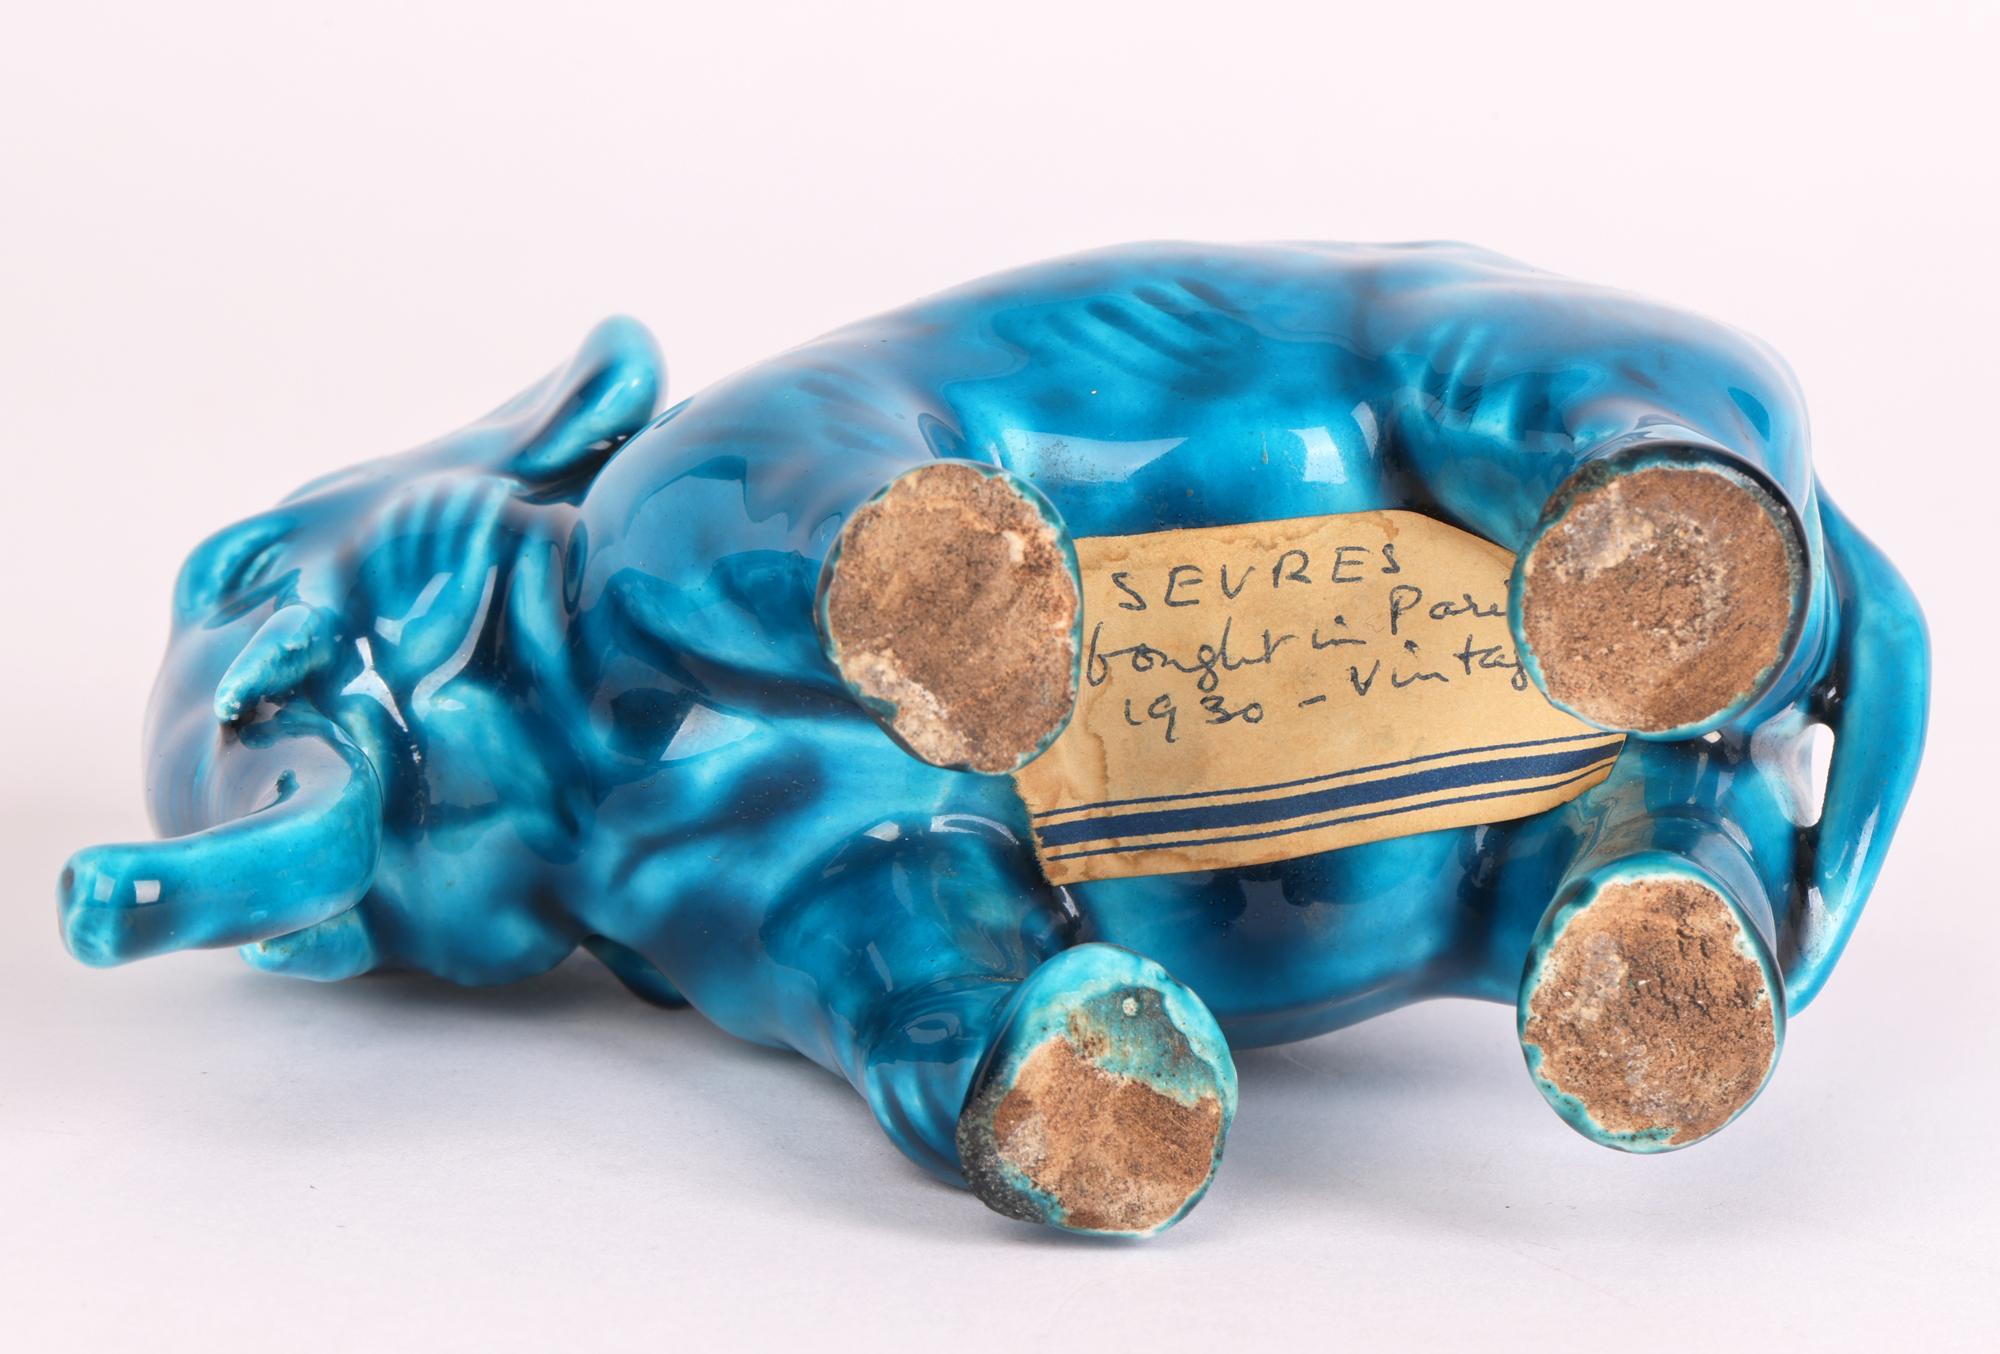 Paul Milet Sevres Turquoise Glazed Ceramic Elephant Figure    For Sale 4